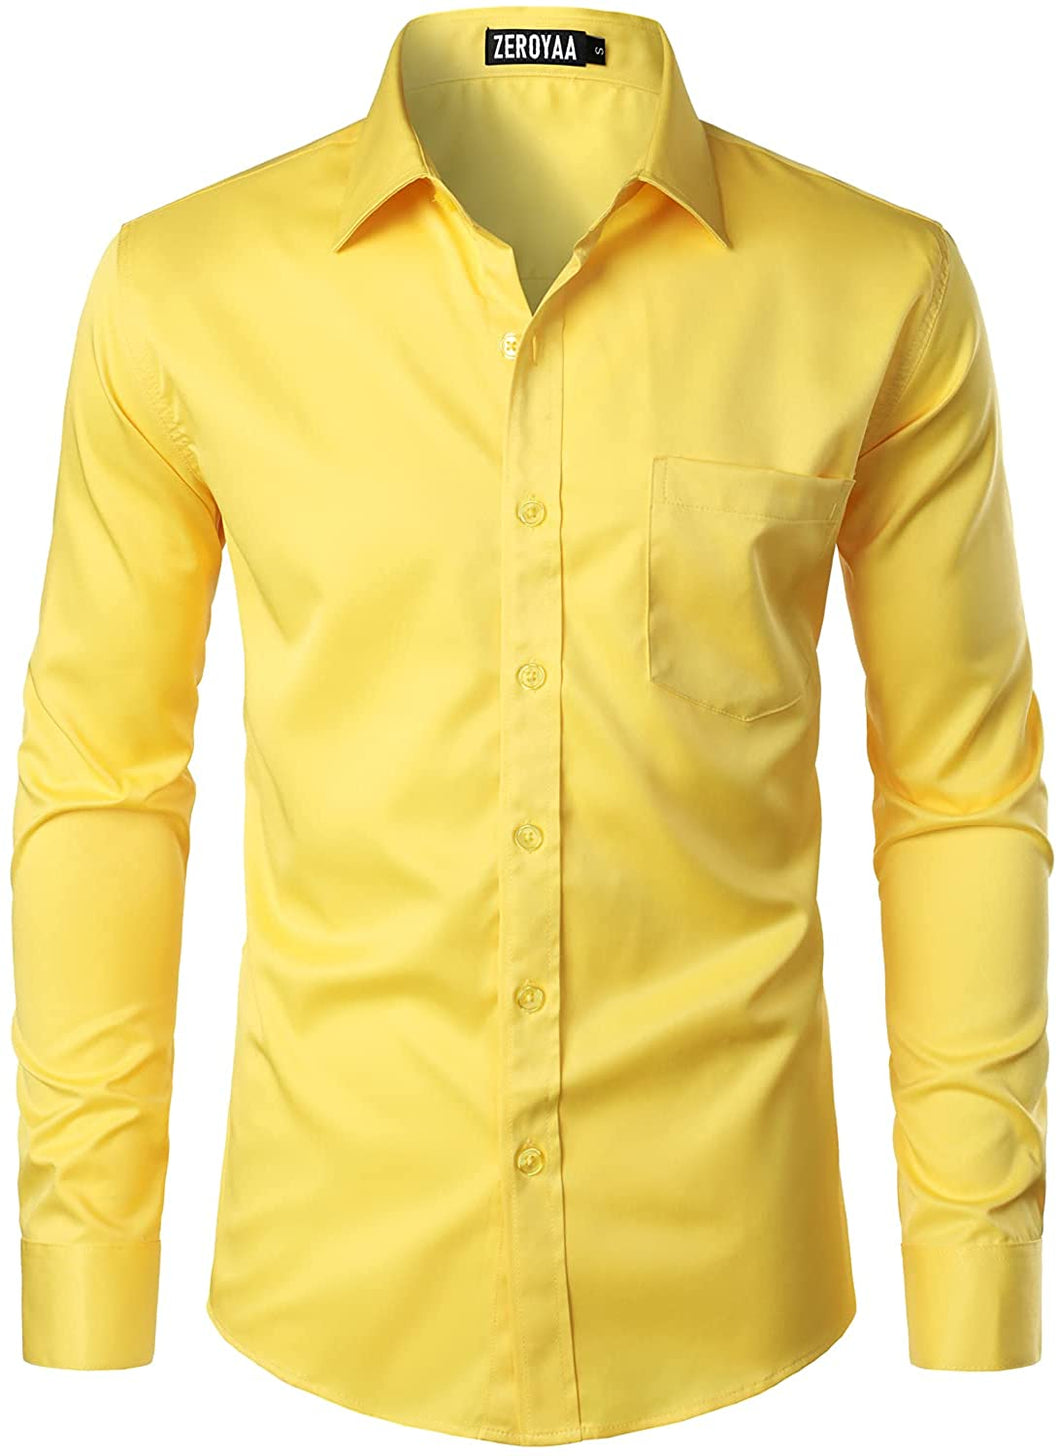 Men's Long Sleeve Yellow Button Up Dress Shirt with Pocket